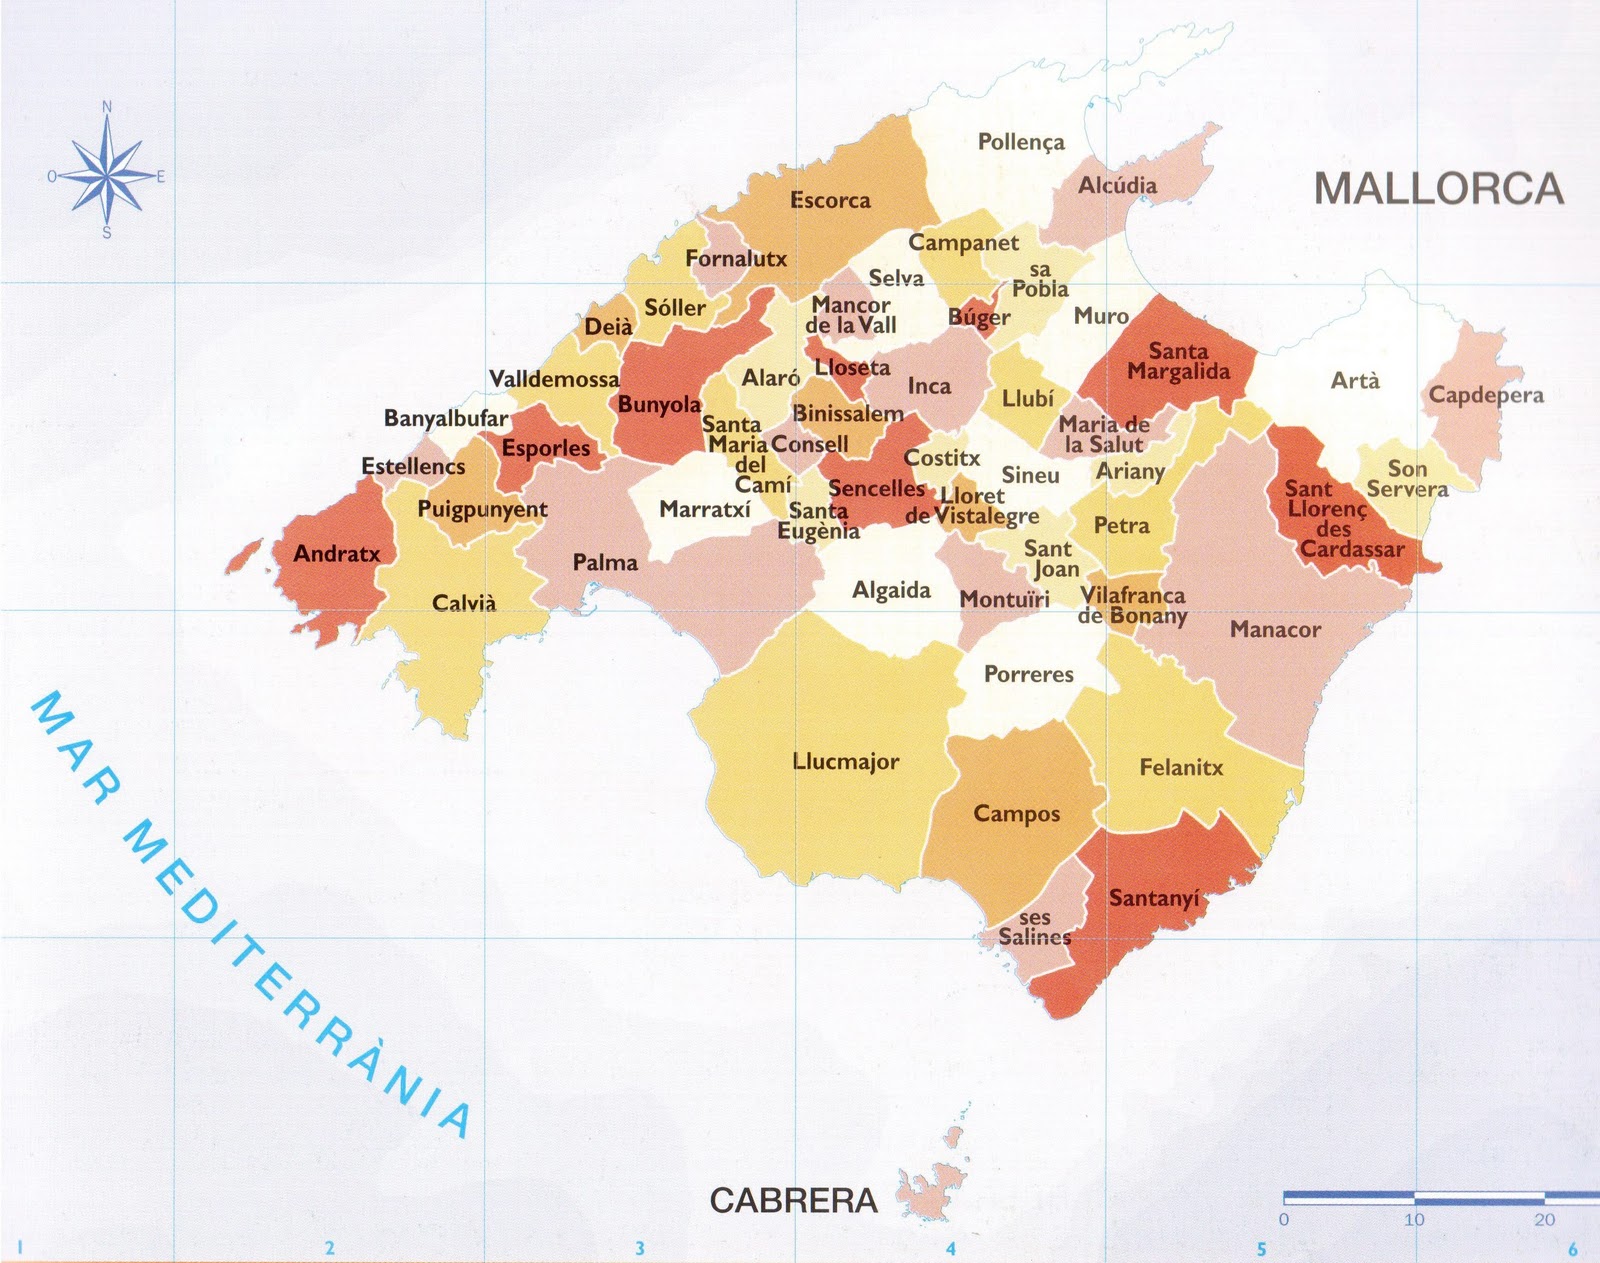 https://atalaia2013.files.wordpress.com/2015/01/mapa-mallorca-municipis.jpg